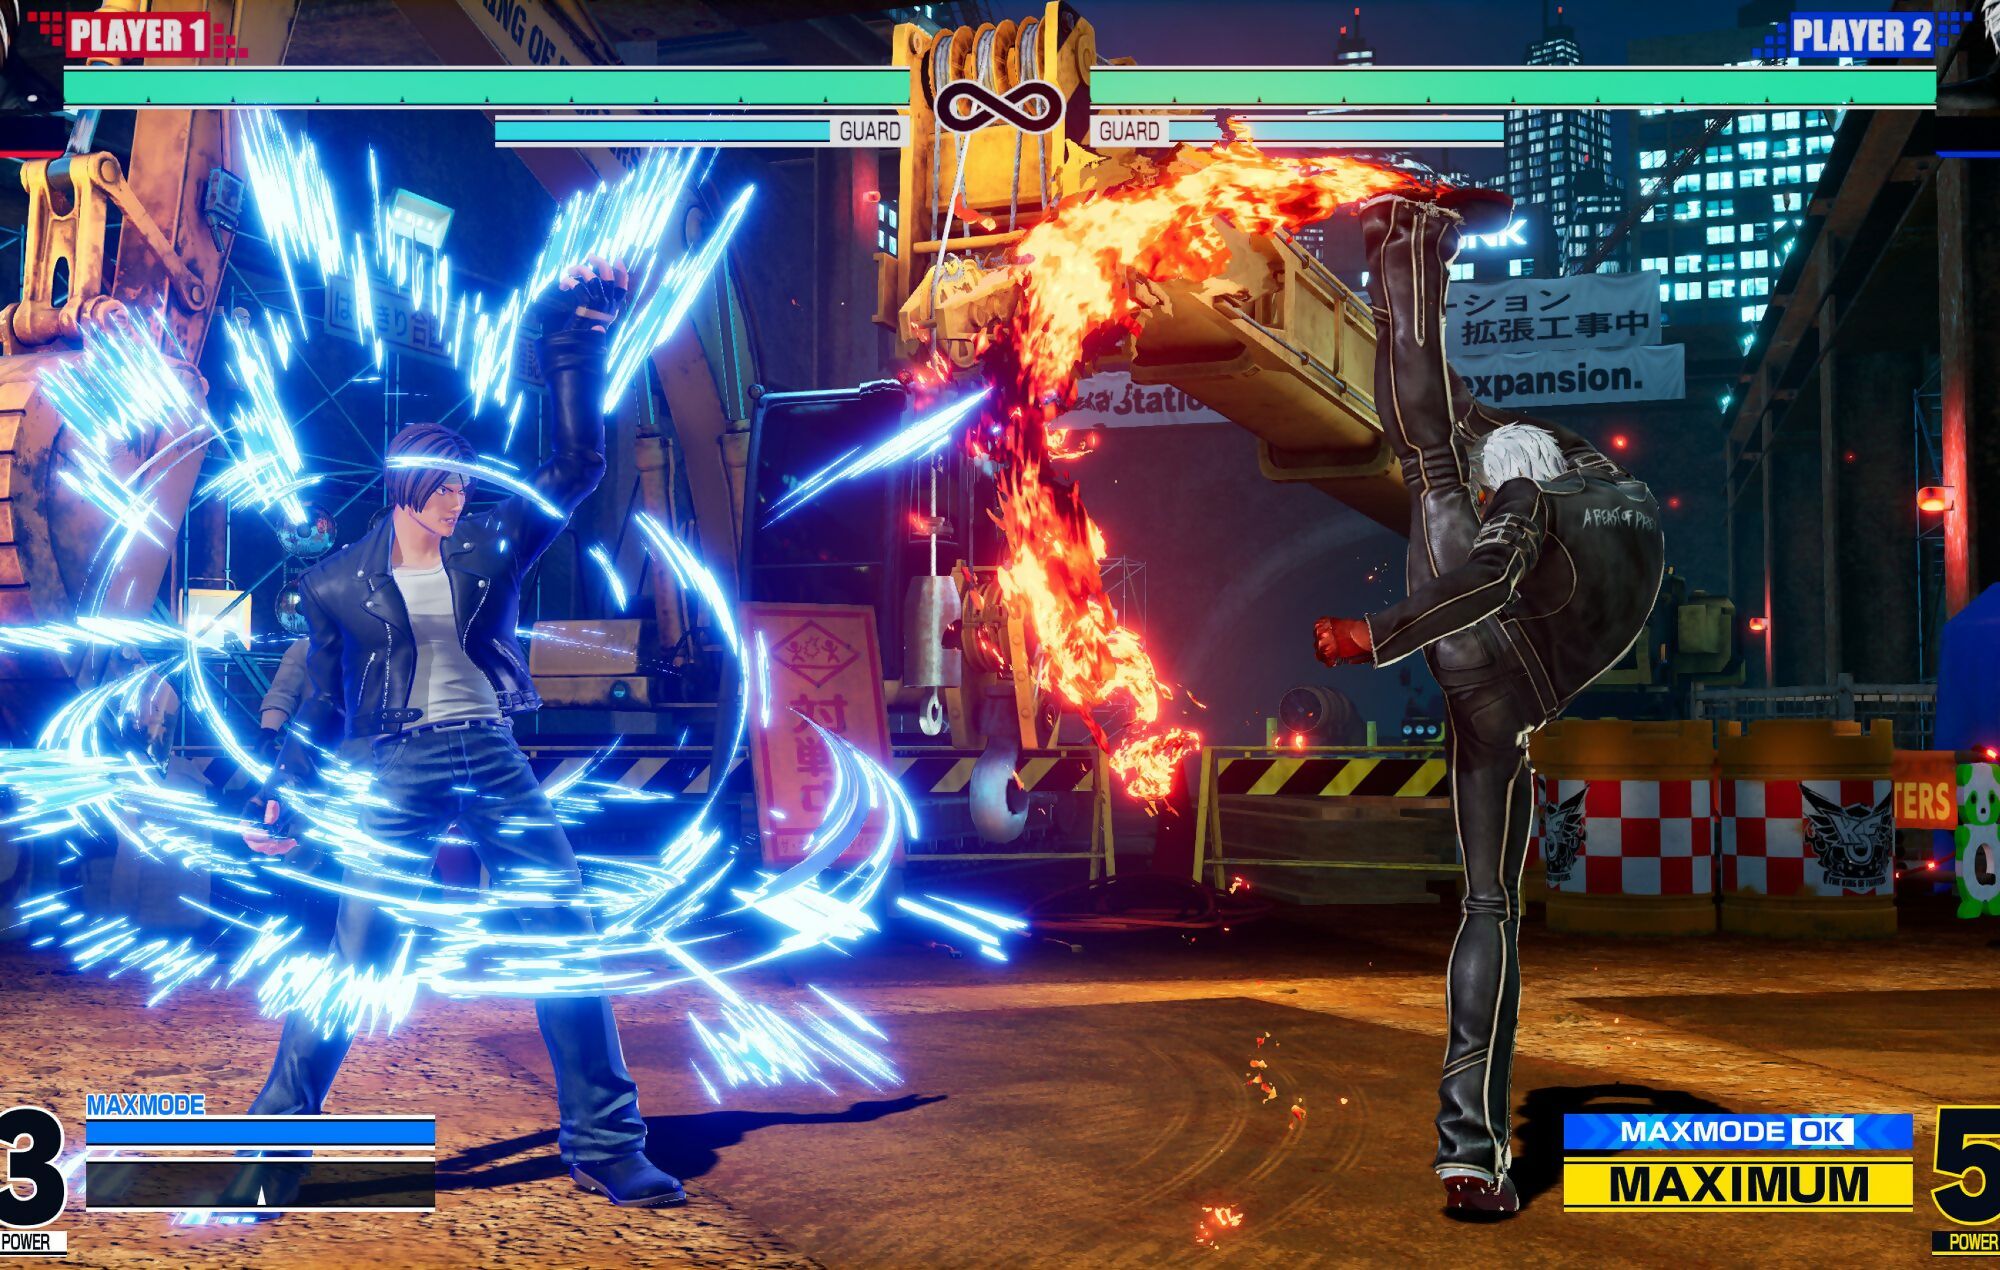 Capcom vs SNK could be making a comeback, says KOF XV producer